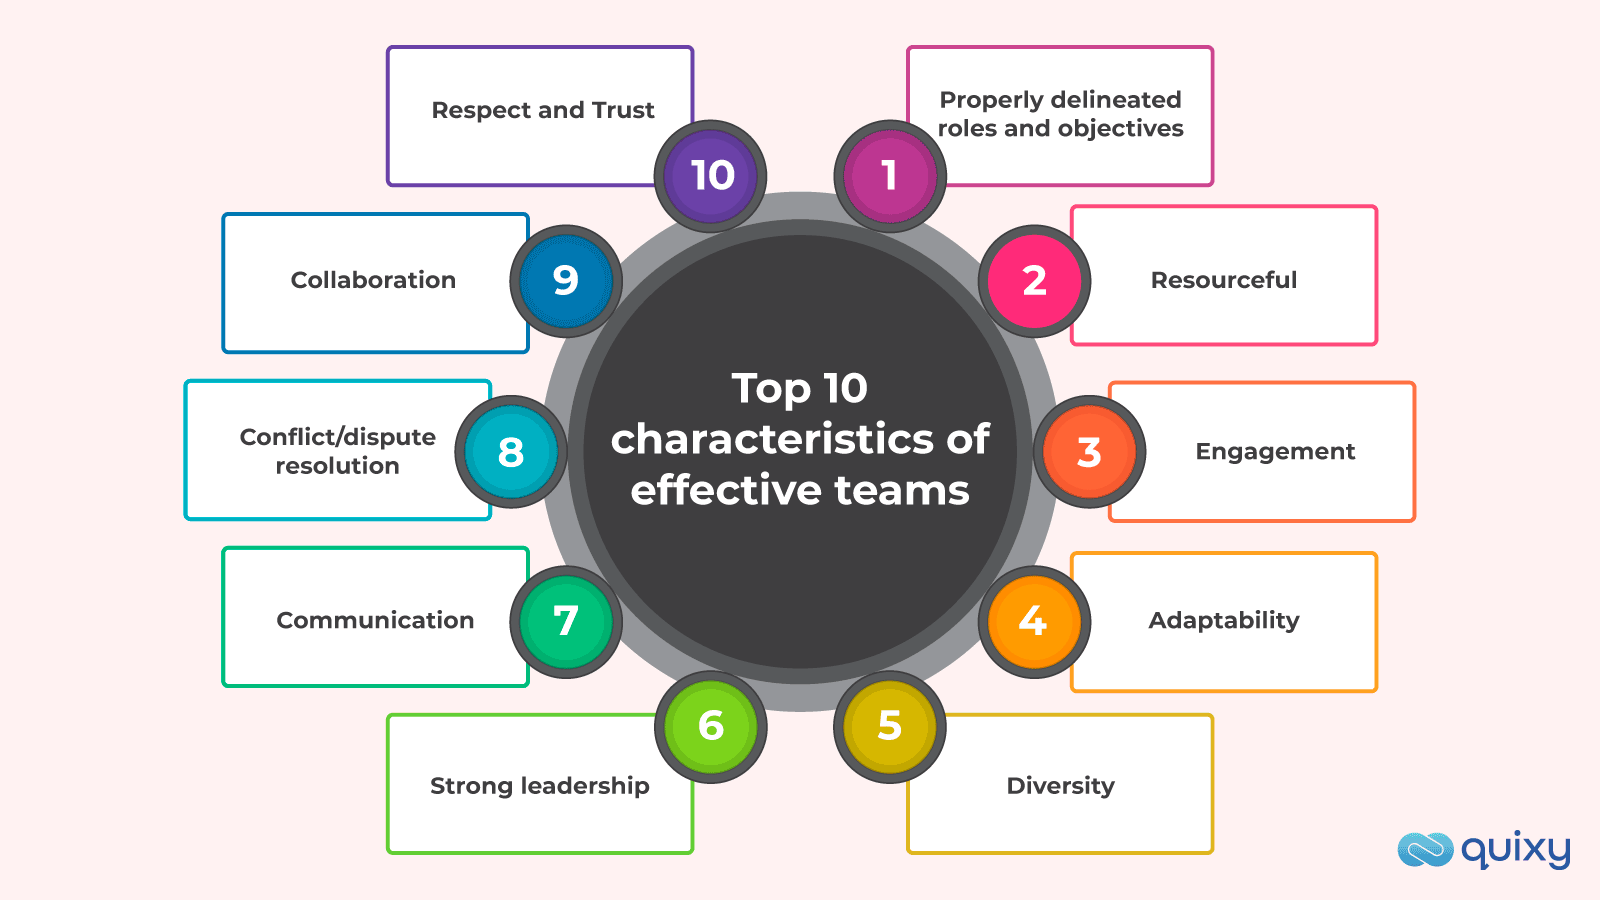 Top 10 characteristics of effective teams